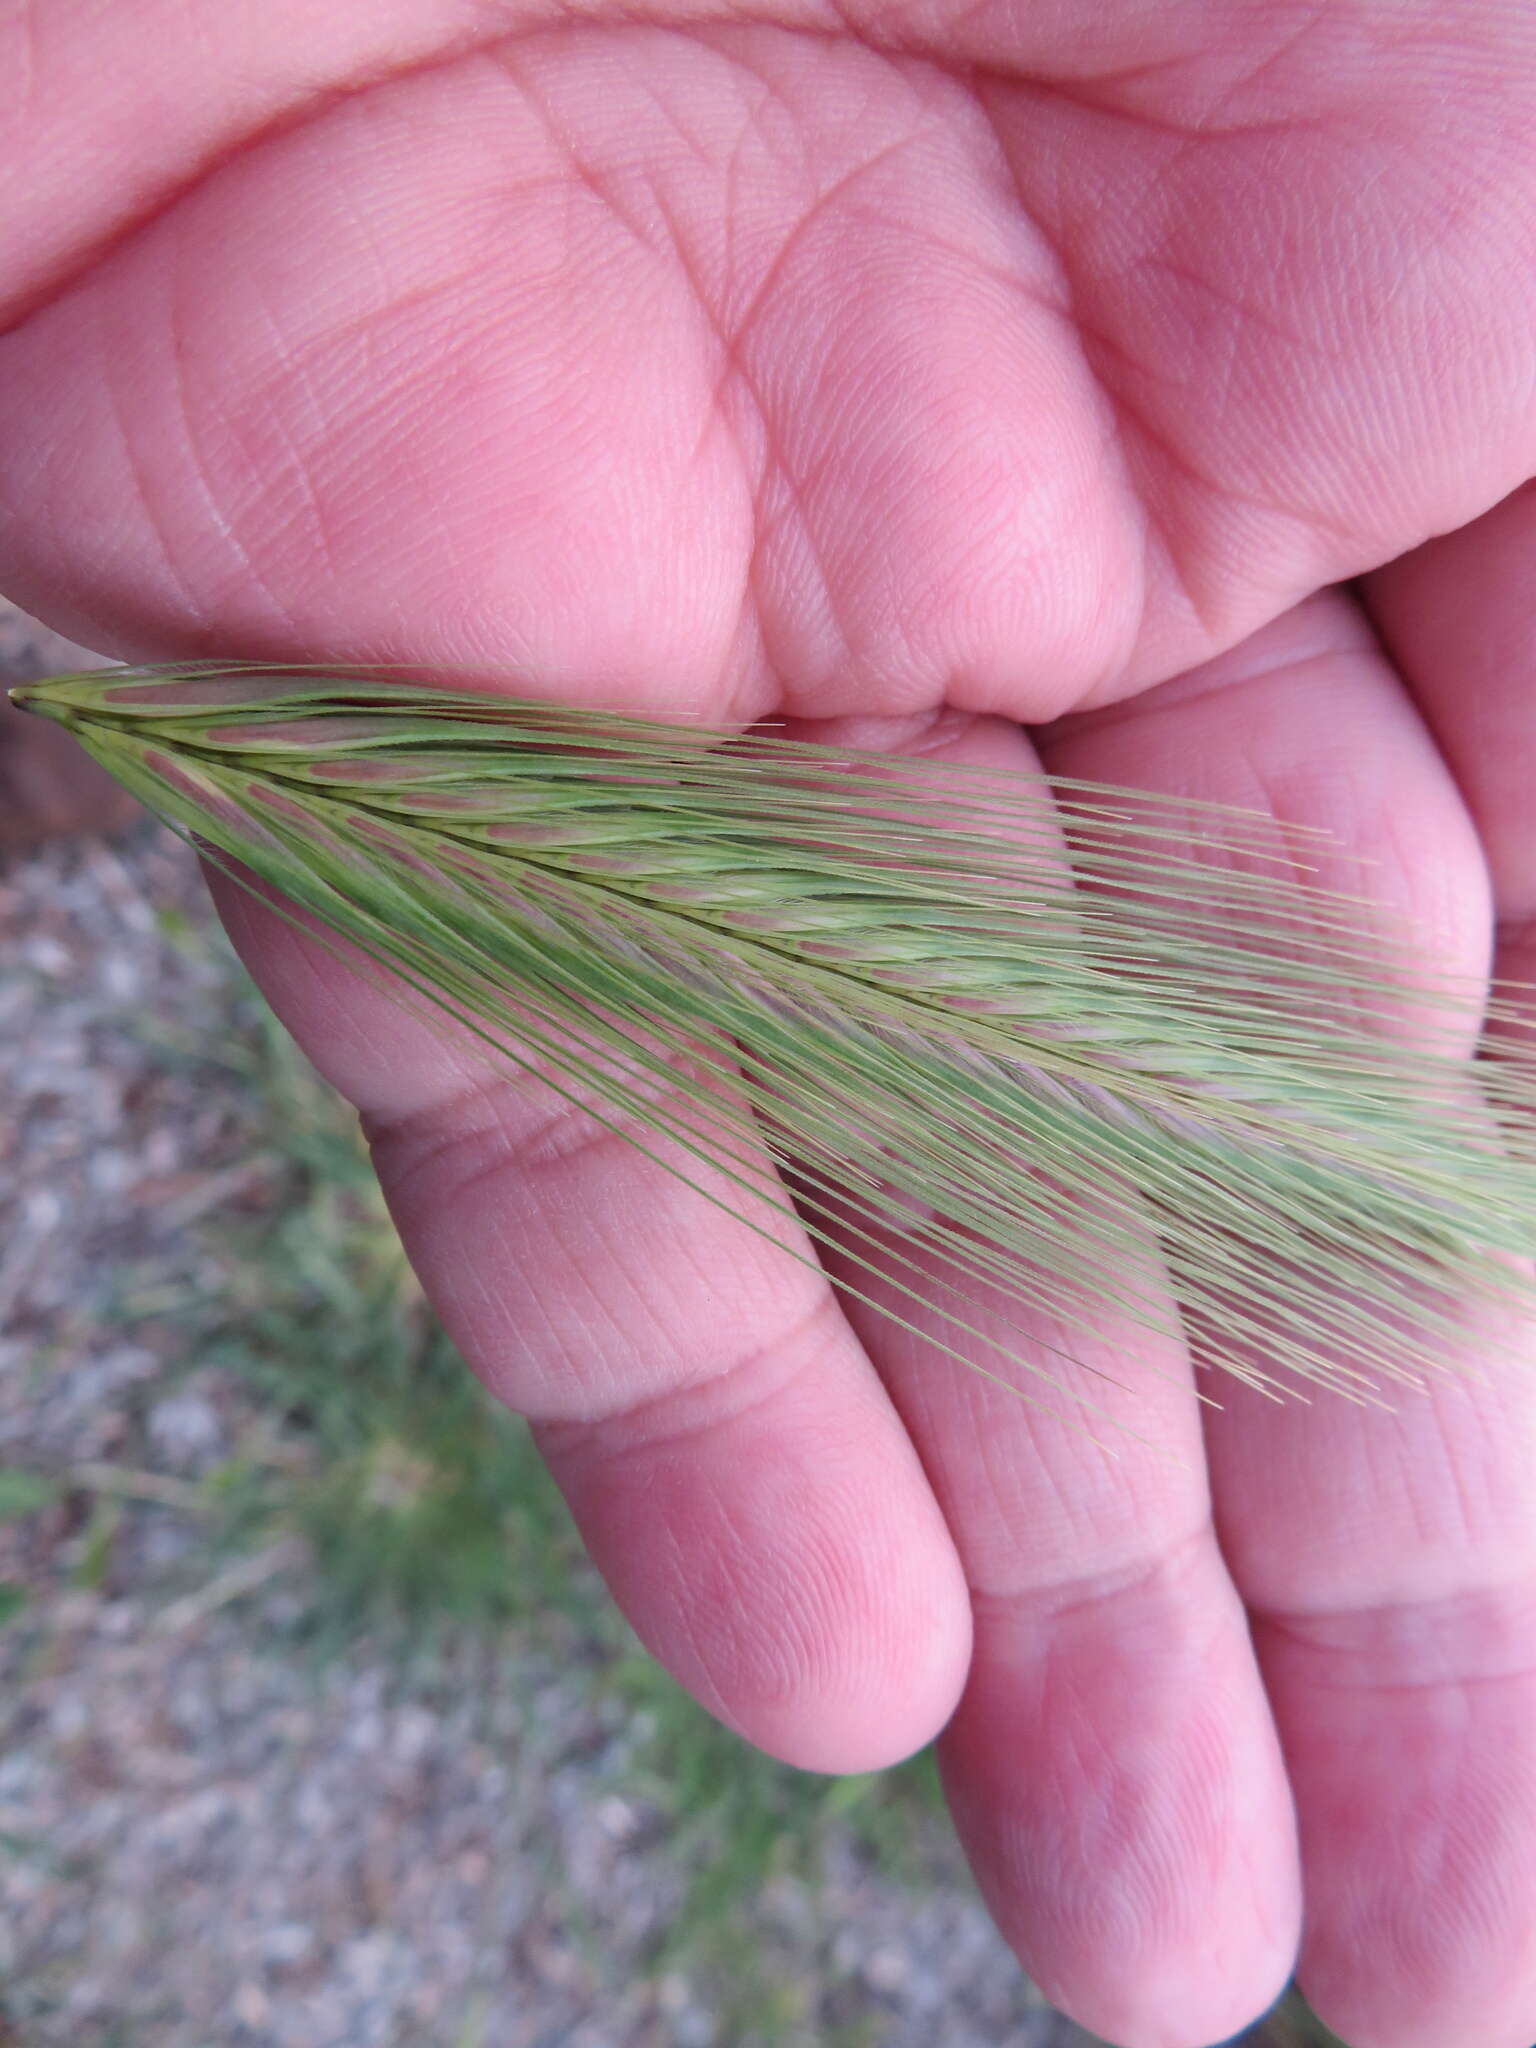 Image of smooth barley